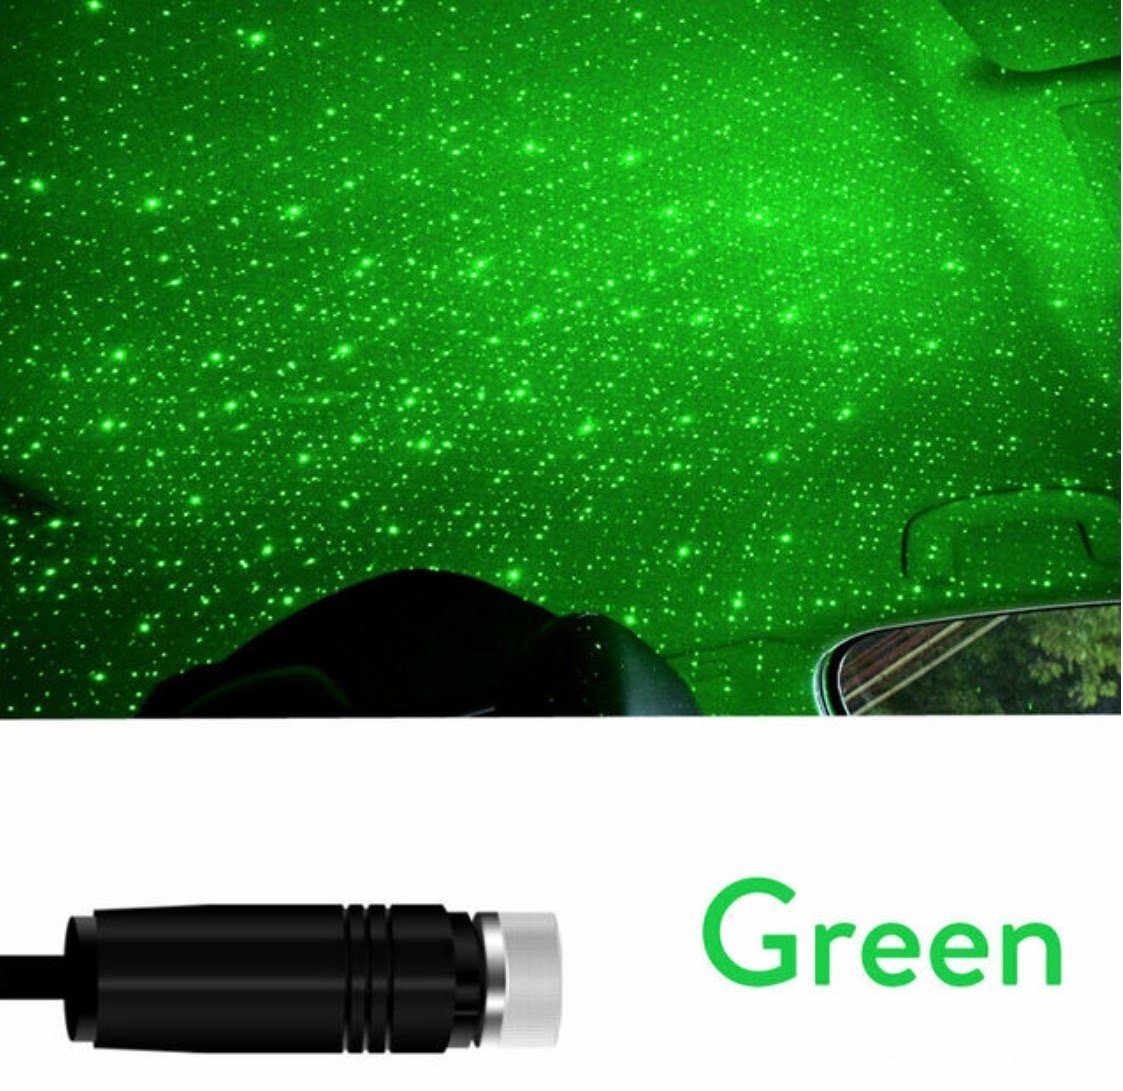 Stelby LED-Sternenhimmel Auto Grün -verschiedene Sternenhimmel Usb-Projektor USB Farboptionen